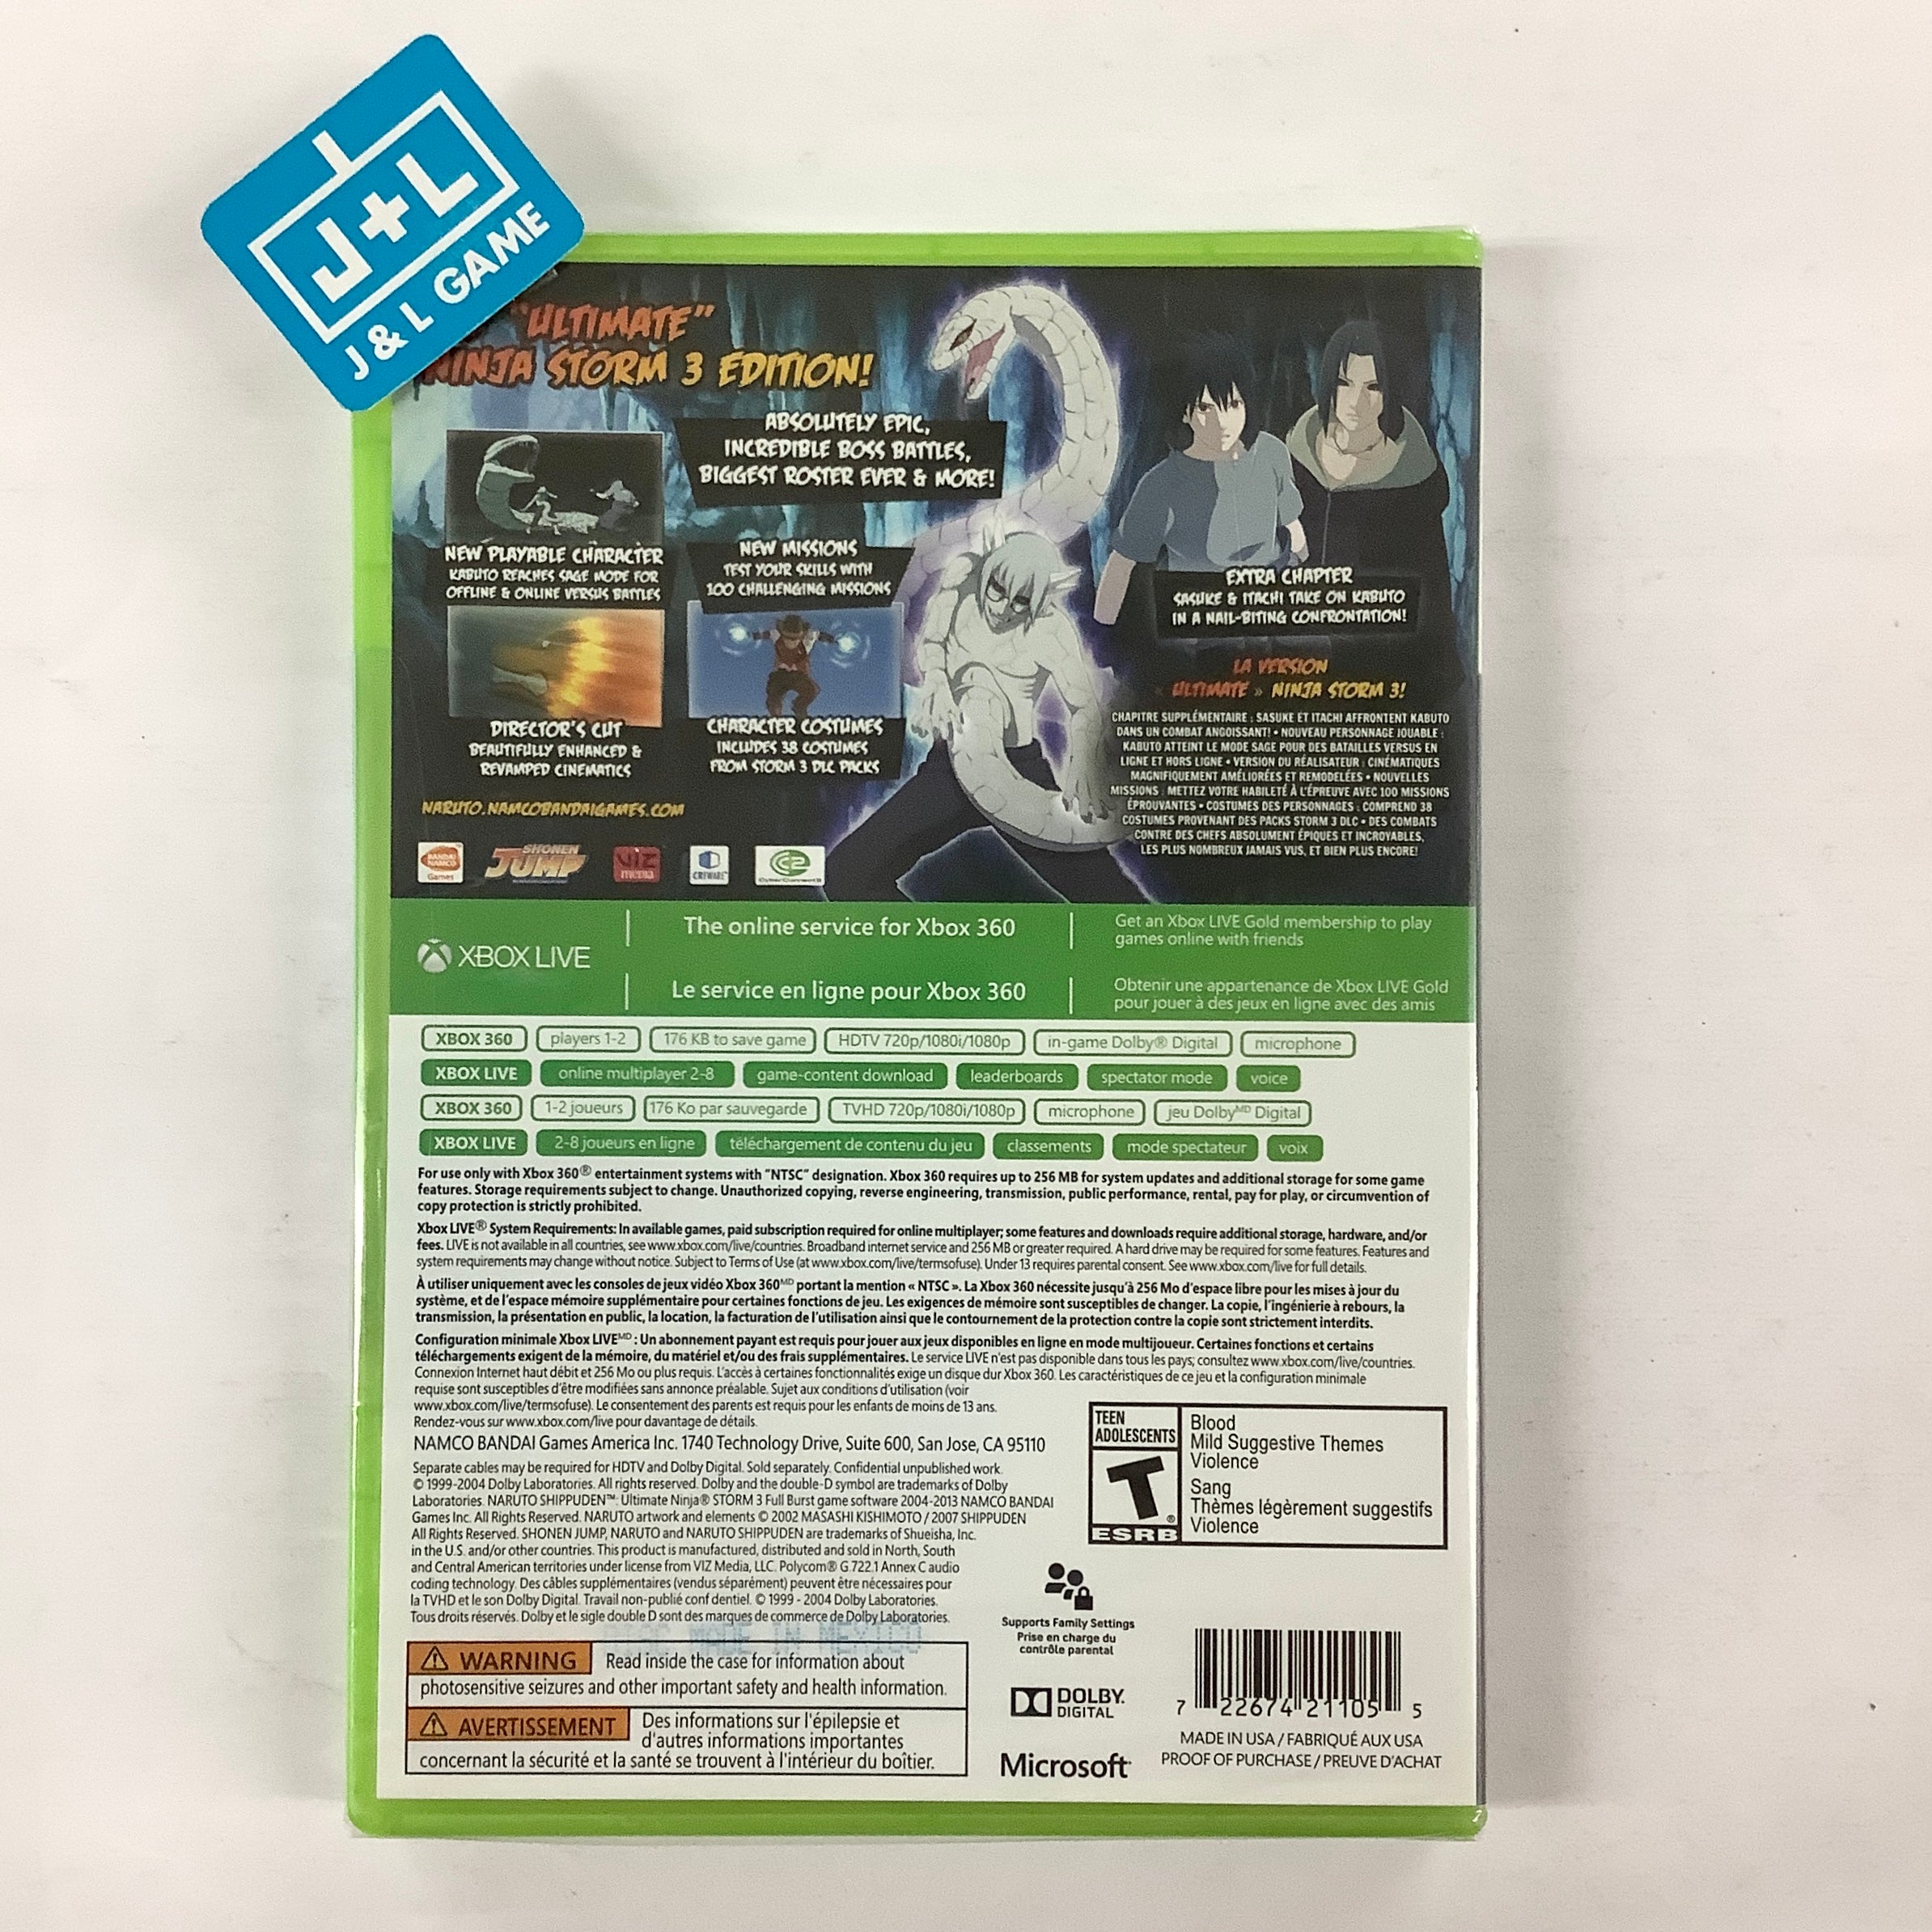 Naruto Shippuden: Ultimate Ninja Storm 3 Full Burst - Xbox 360 Video Games Namco Bandai Games   